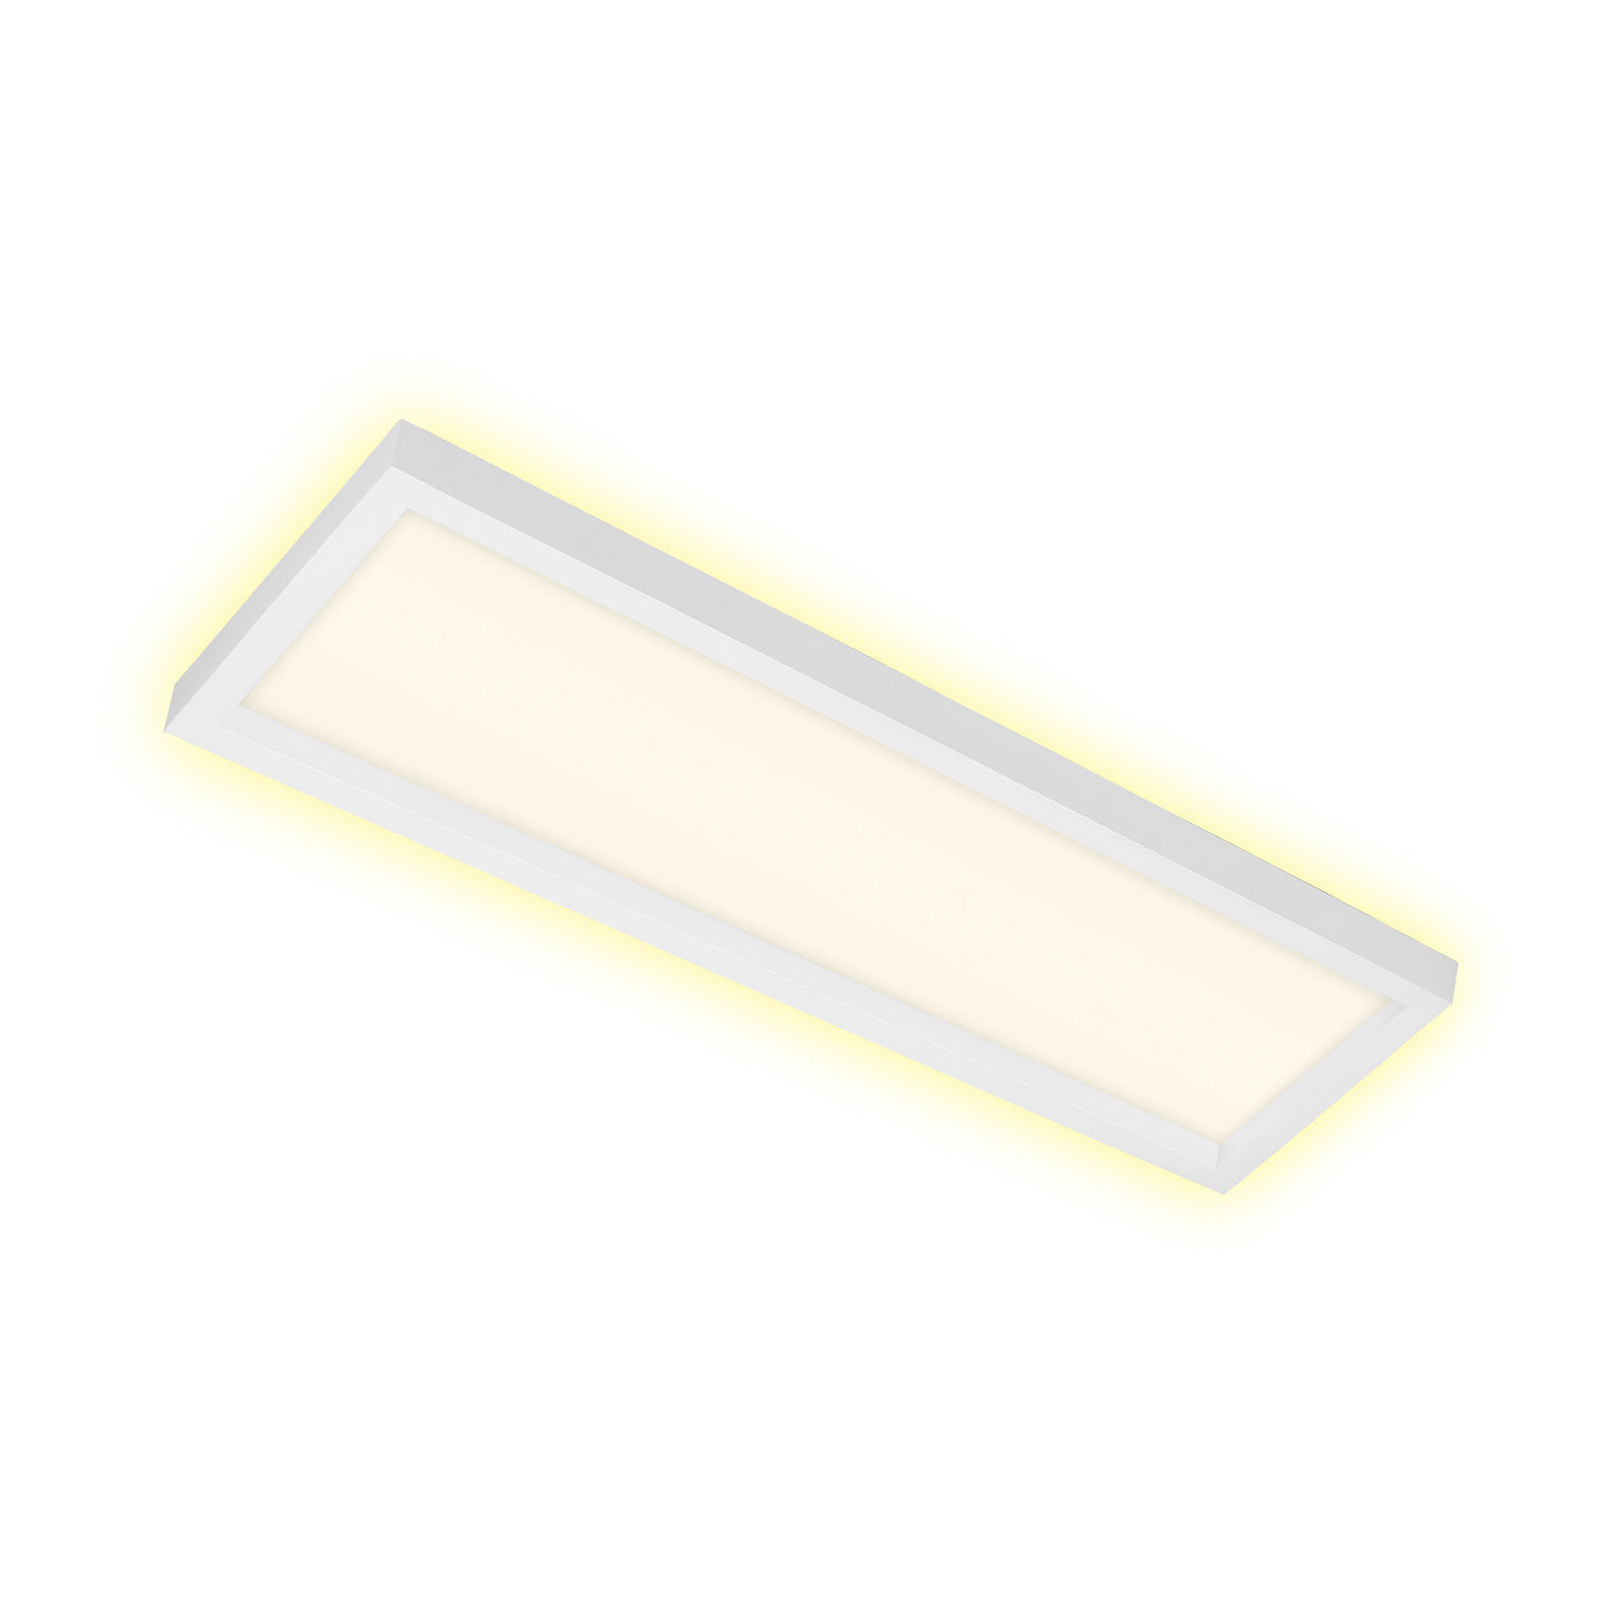 LED-taklampe 7365, 58x20 cm hvit